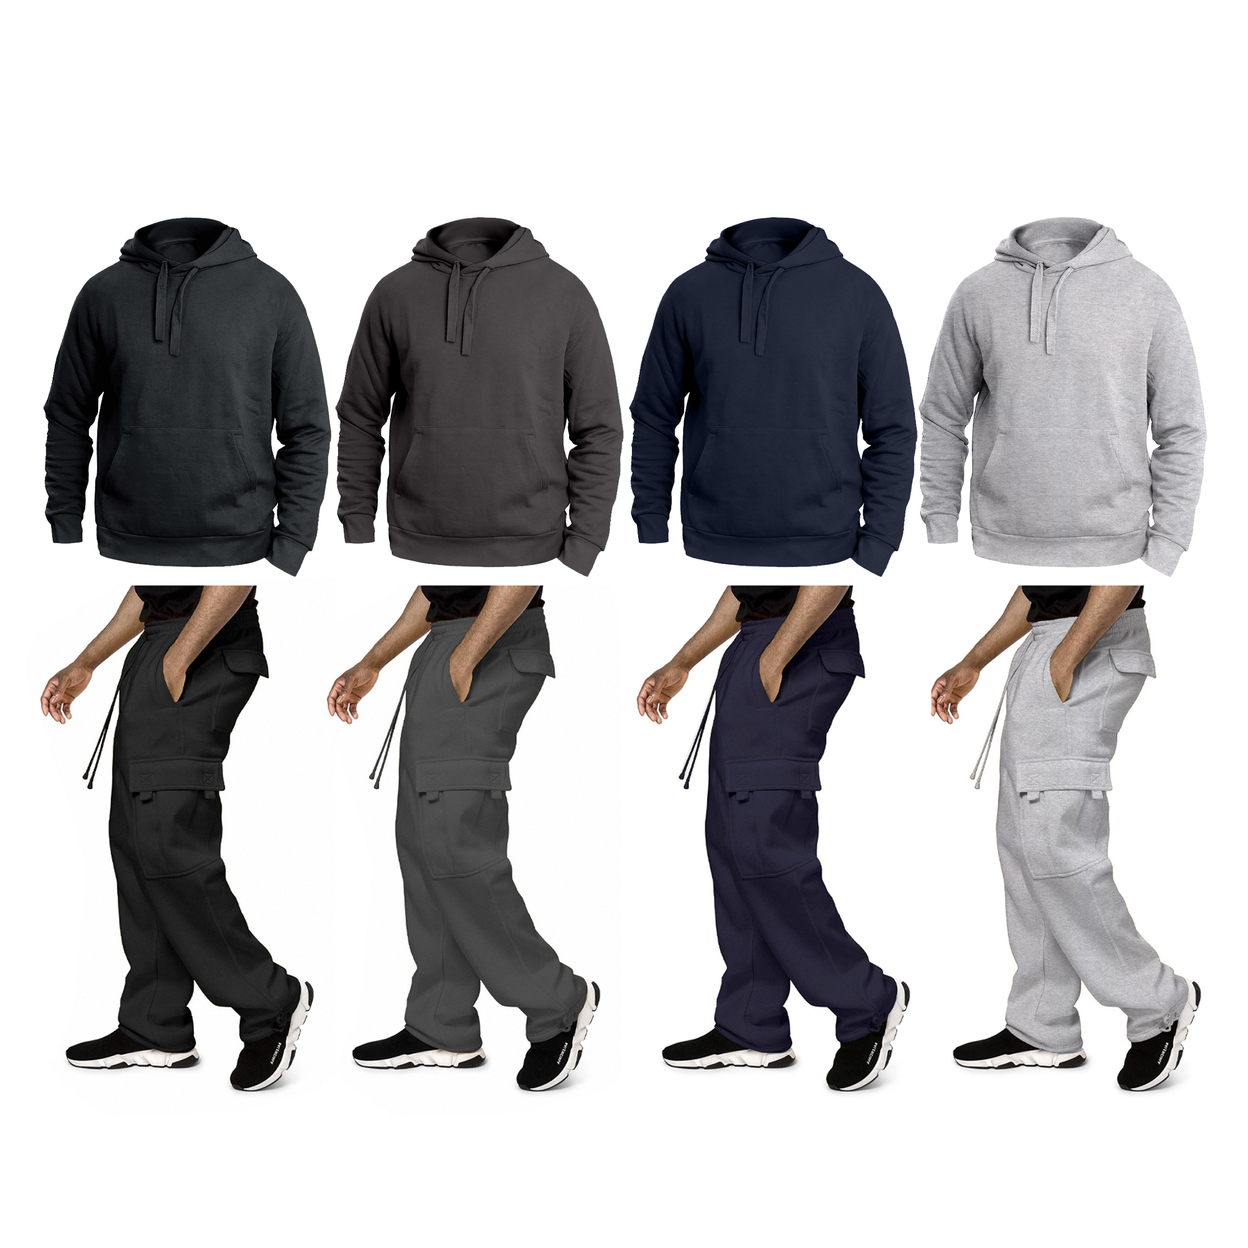 Multi-Pack: Big & Tall Men's Winter Warm Cozy Athletic Fleece Lined Multi-Pocket Cargo Sweatsuit - Navy, 2-pack, 3xl